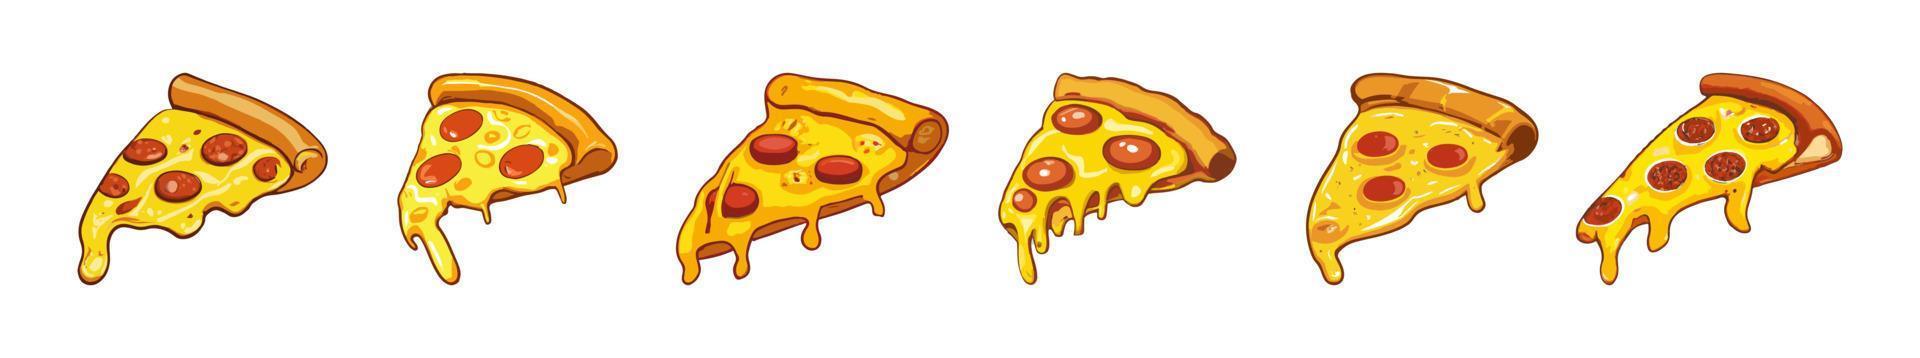 rebanada de pizza con queso goteando. ilustración vectorial vector